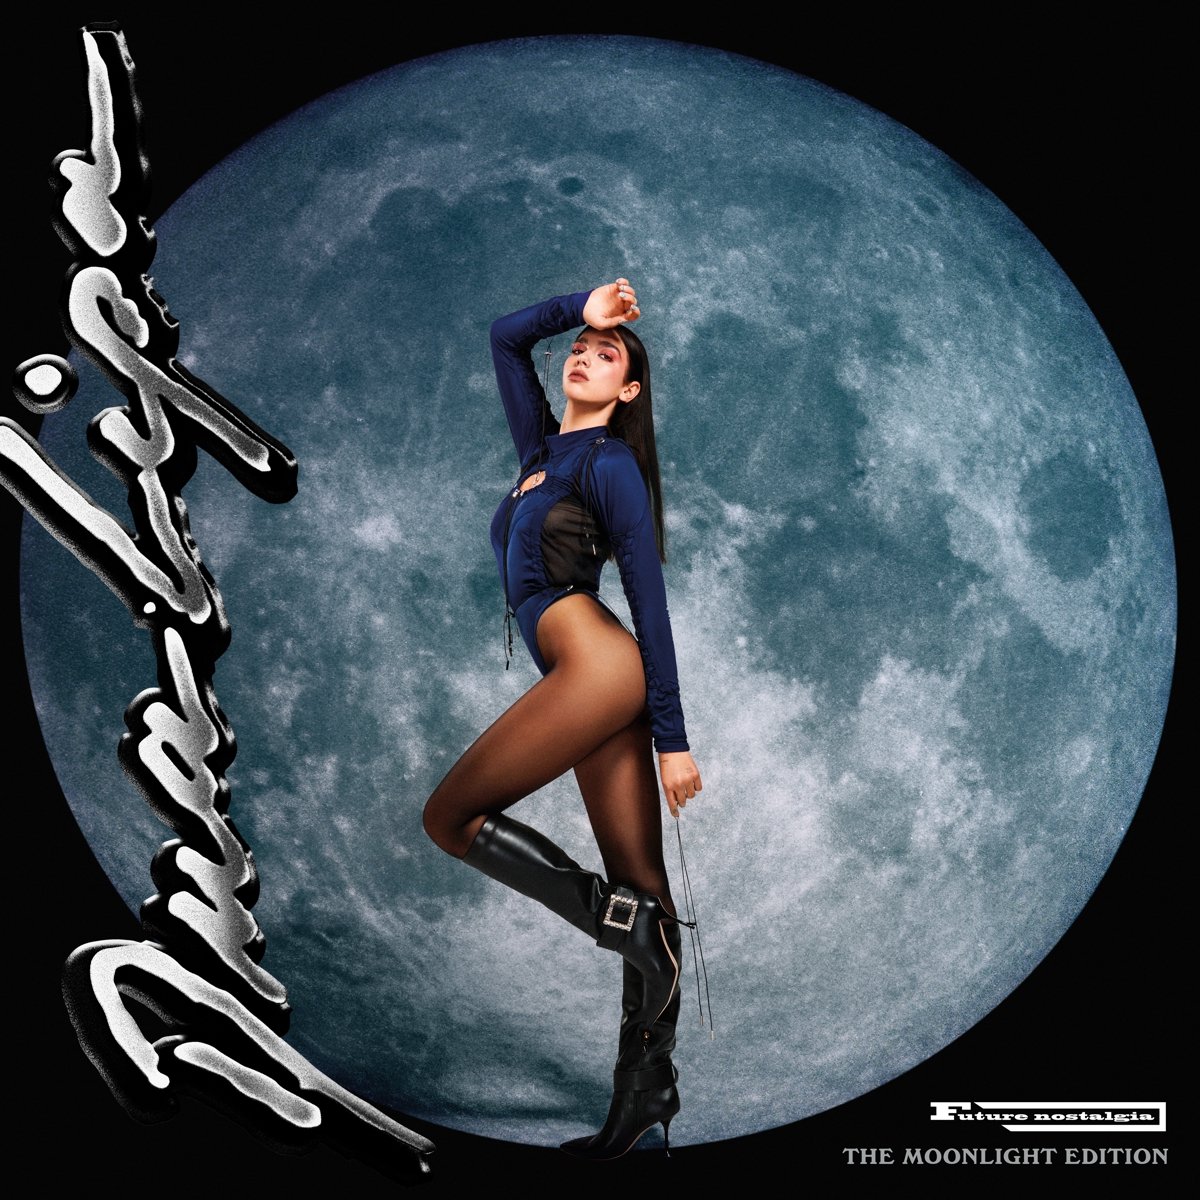 Future Nostalgia (CD) (The Moonlight Edition) (Deluxe Edition) - Dua Lipa